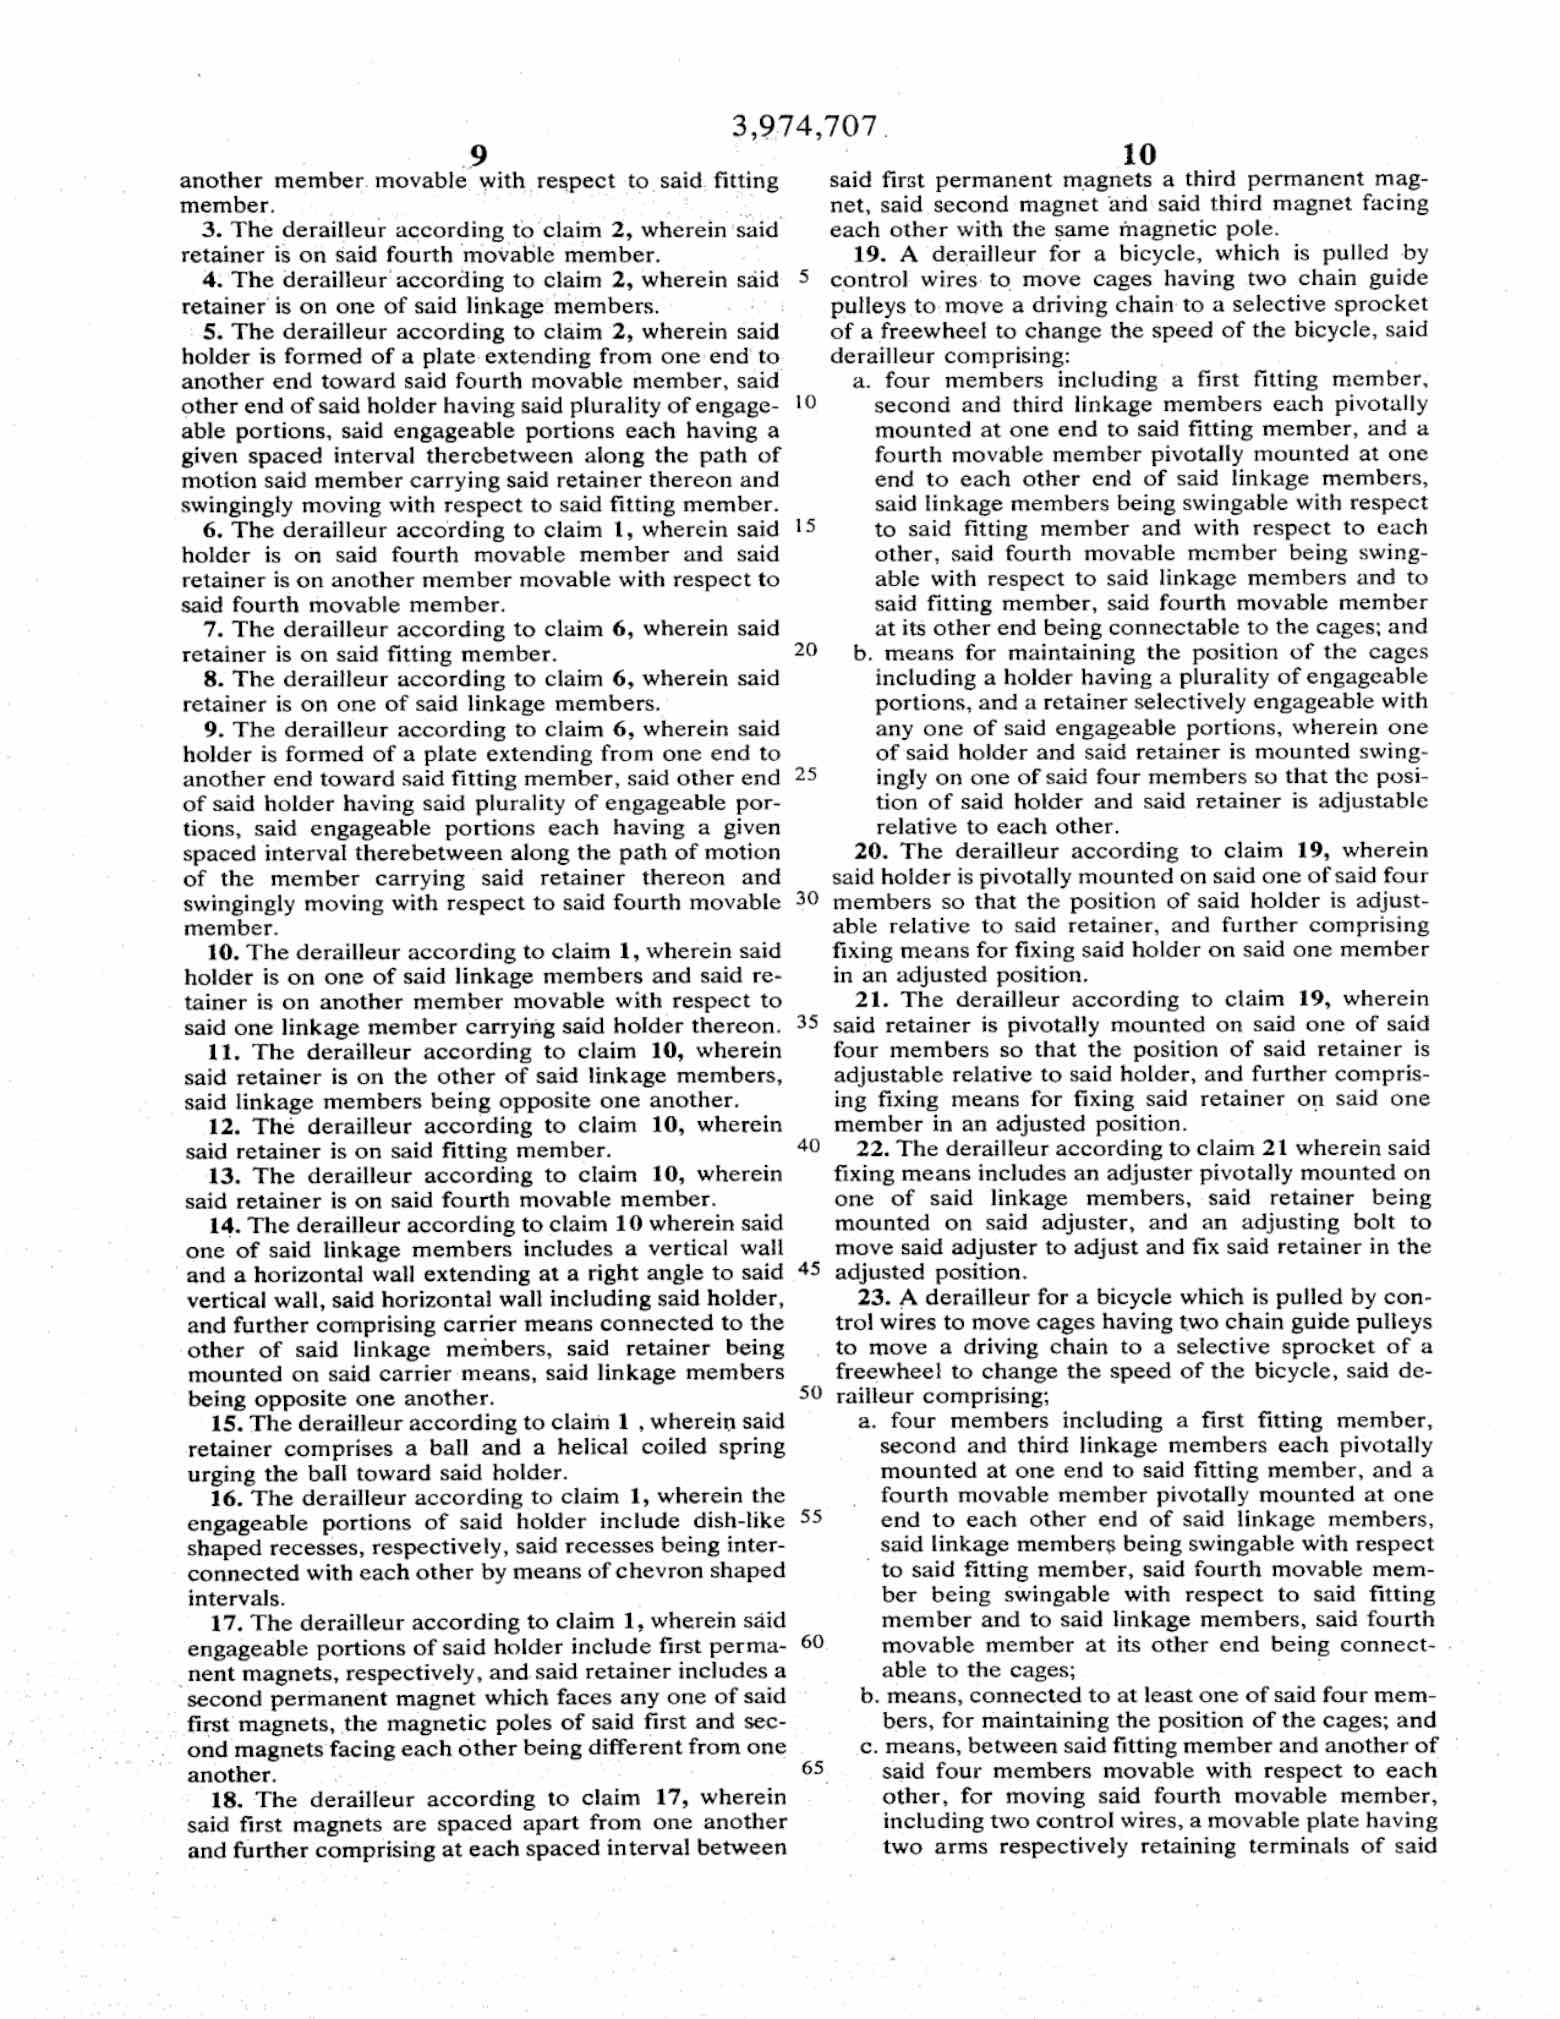 US Patent 3,974,707 - Shimano Positron scan 6 main image